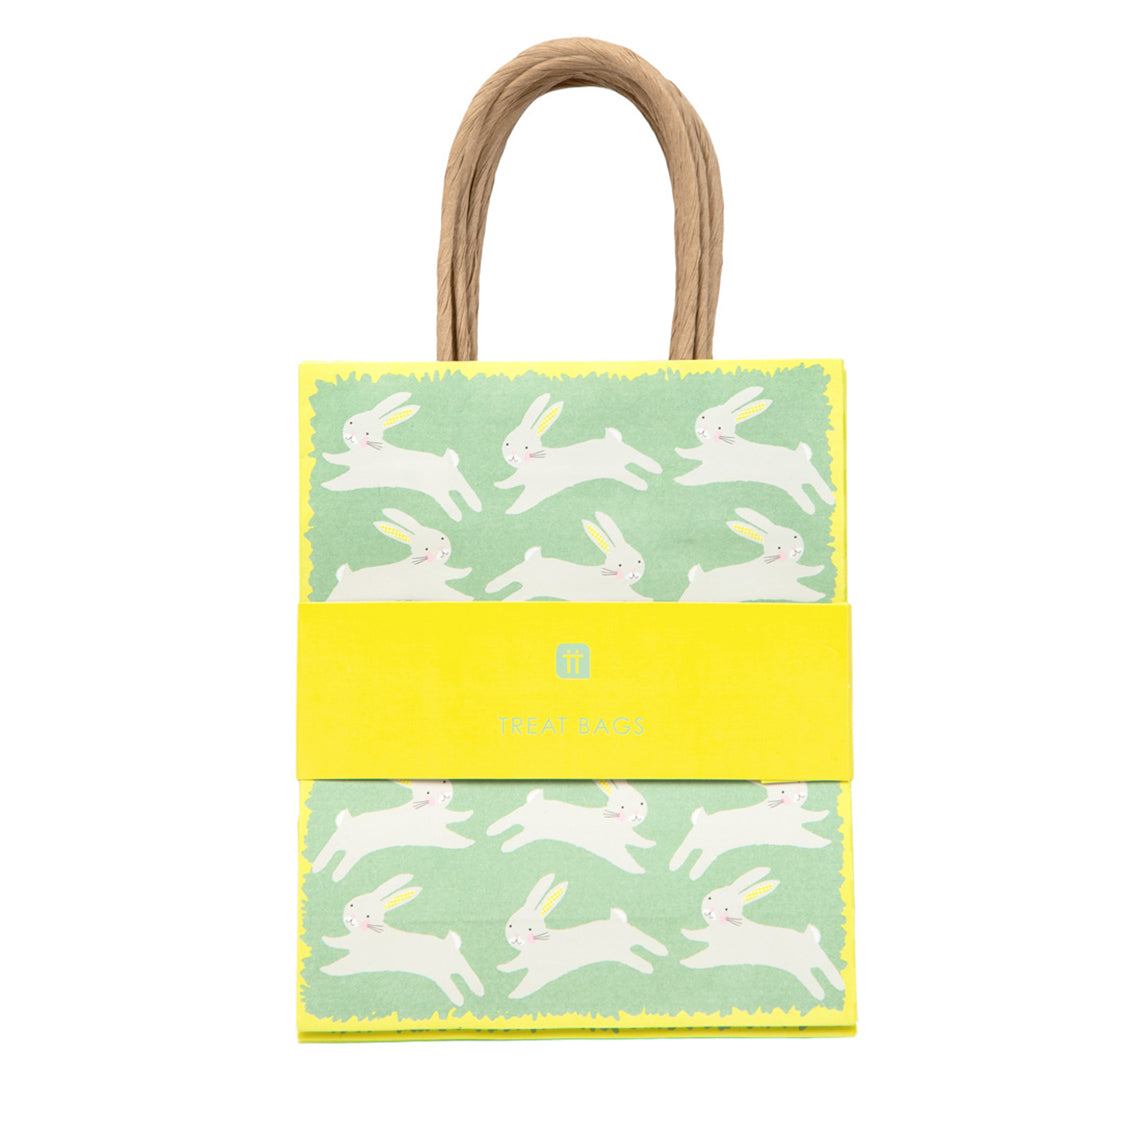 Spring Bunny Treat Bags - 8 Pack in packaging